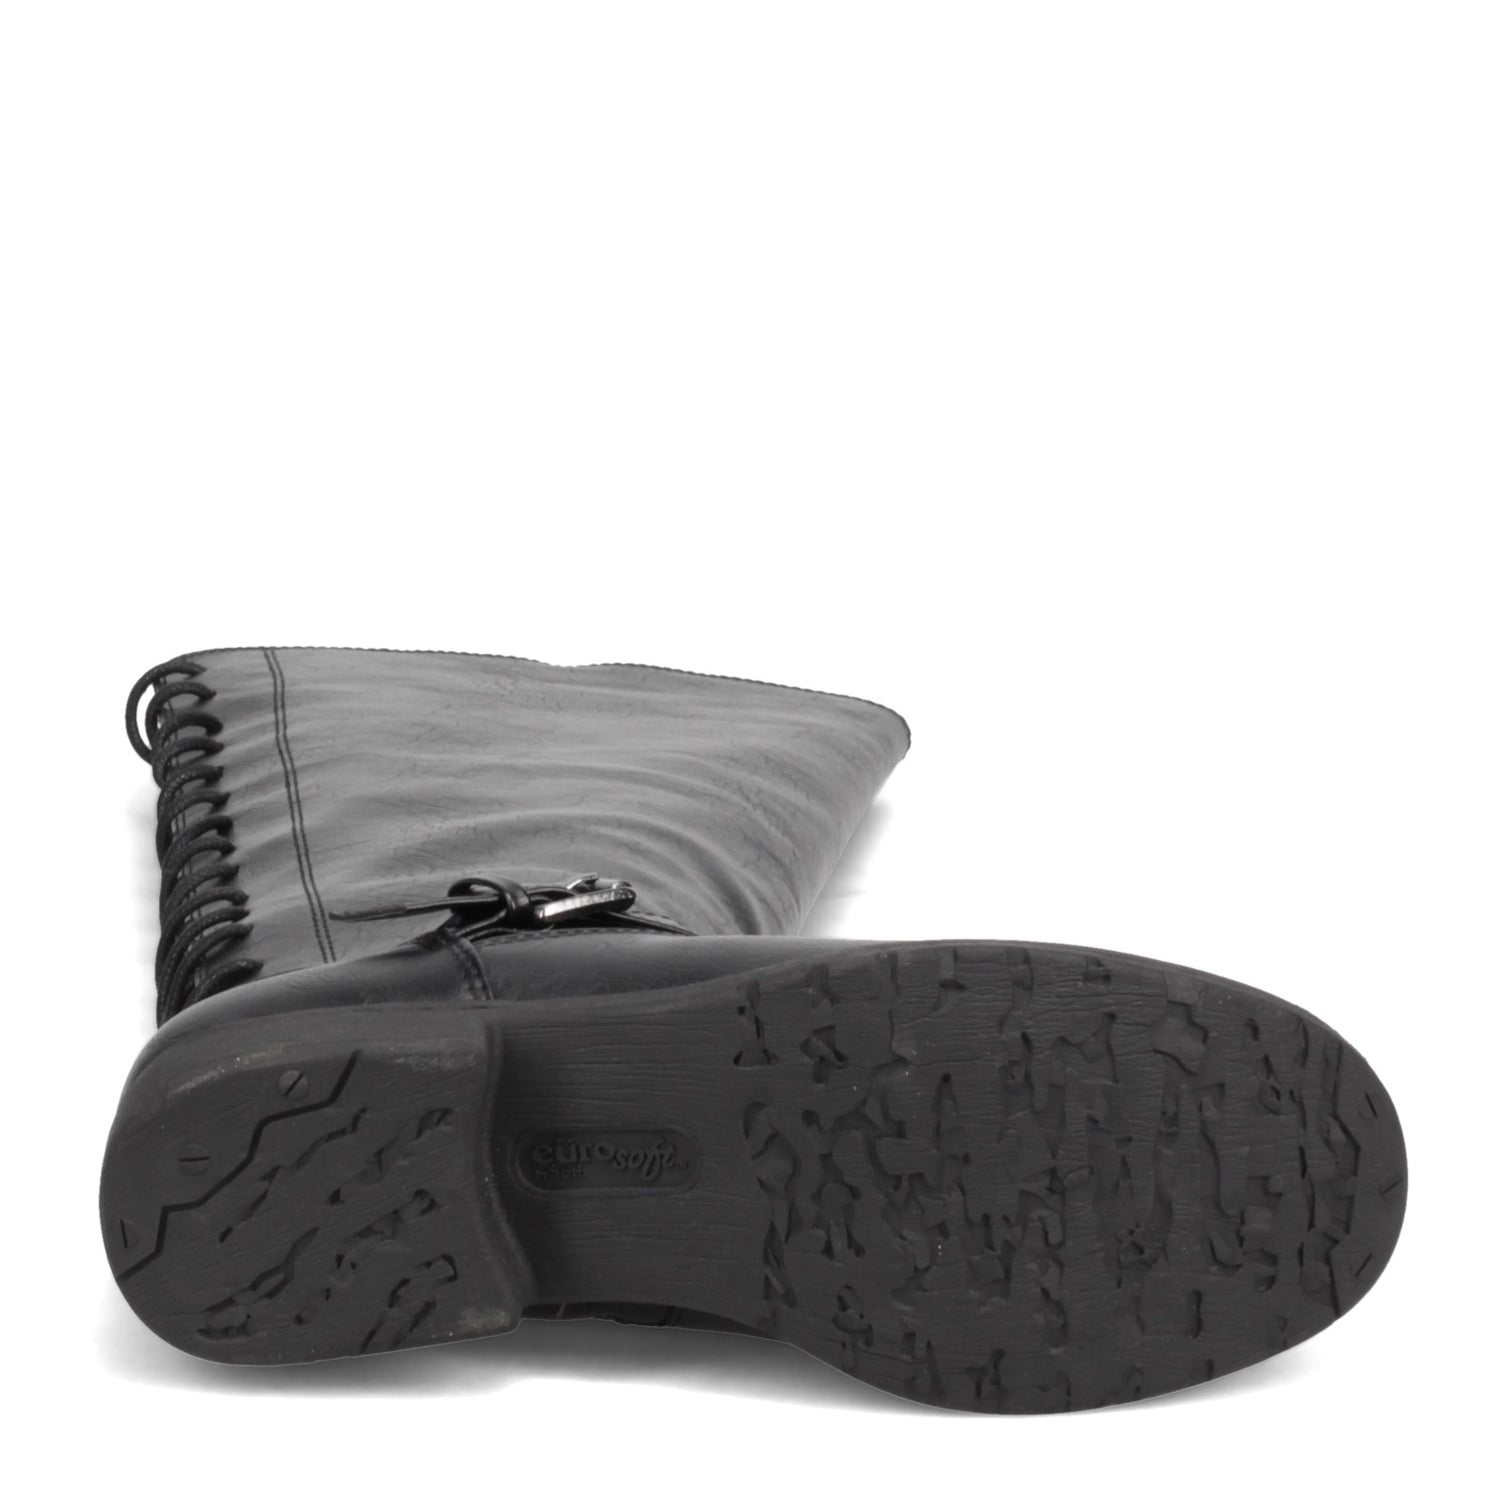 Peltz Shoes  Women's Euro Soft by Sofft Selden Boot BLACK ES0007301